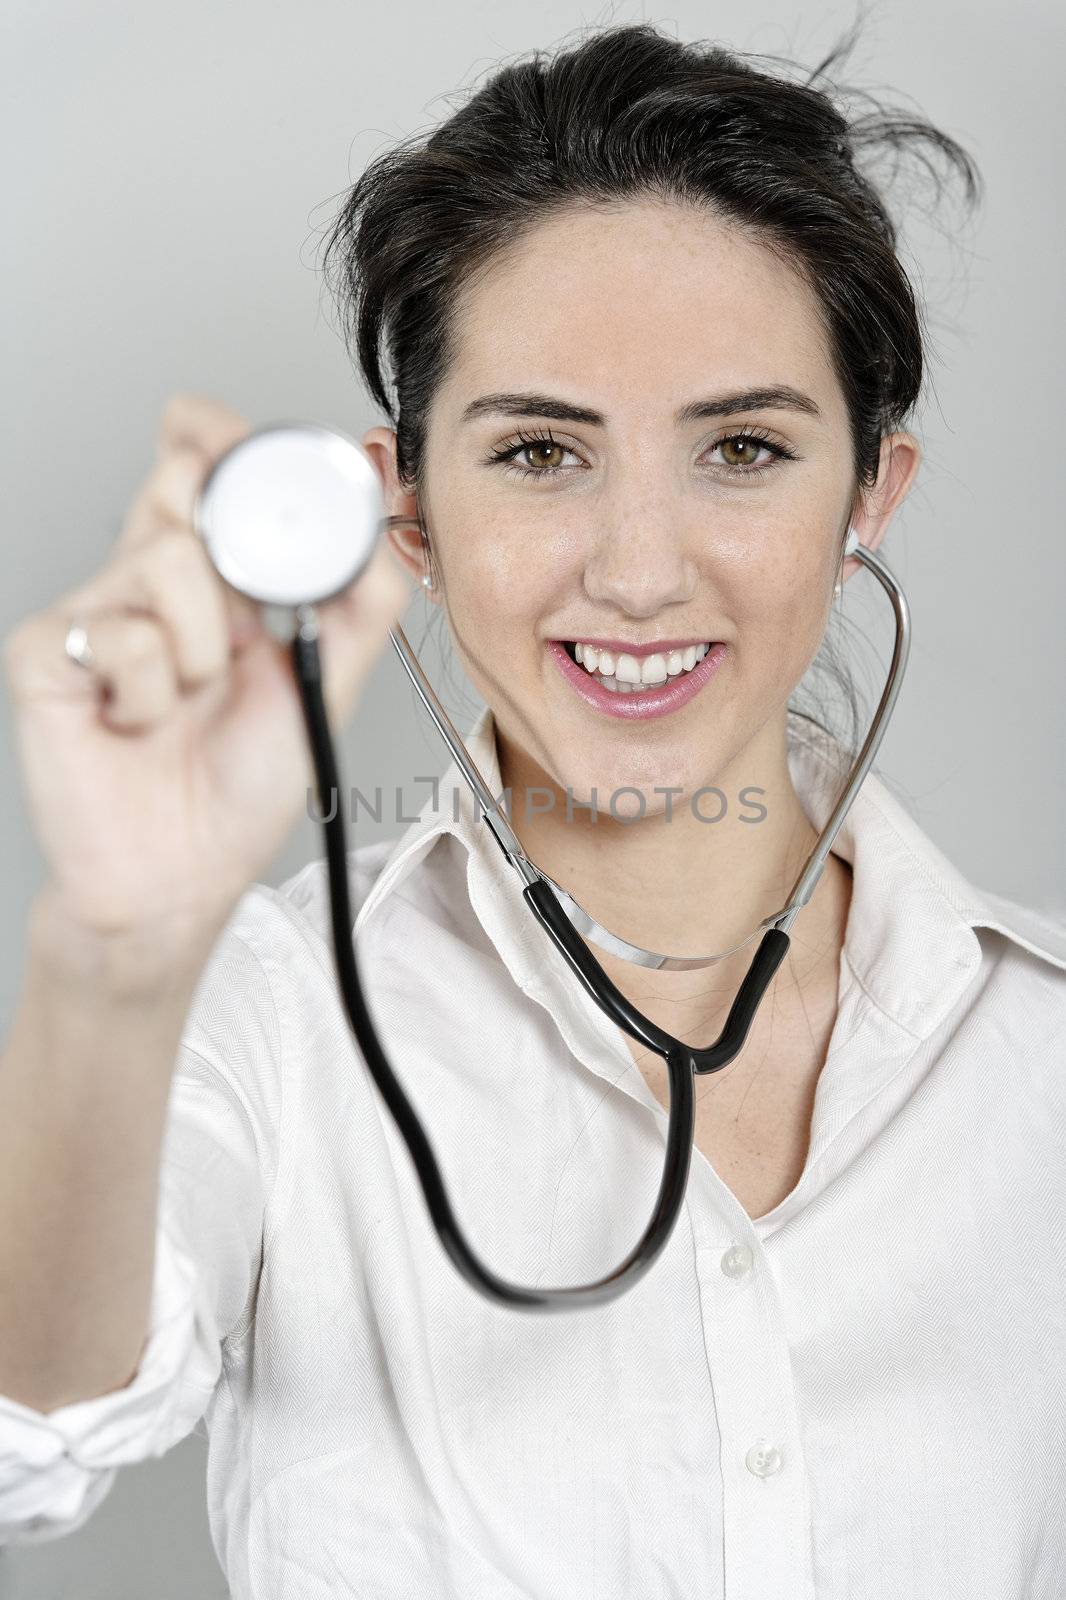 Female doctor using a stethoscope by studiofi